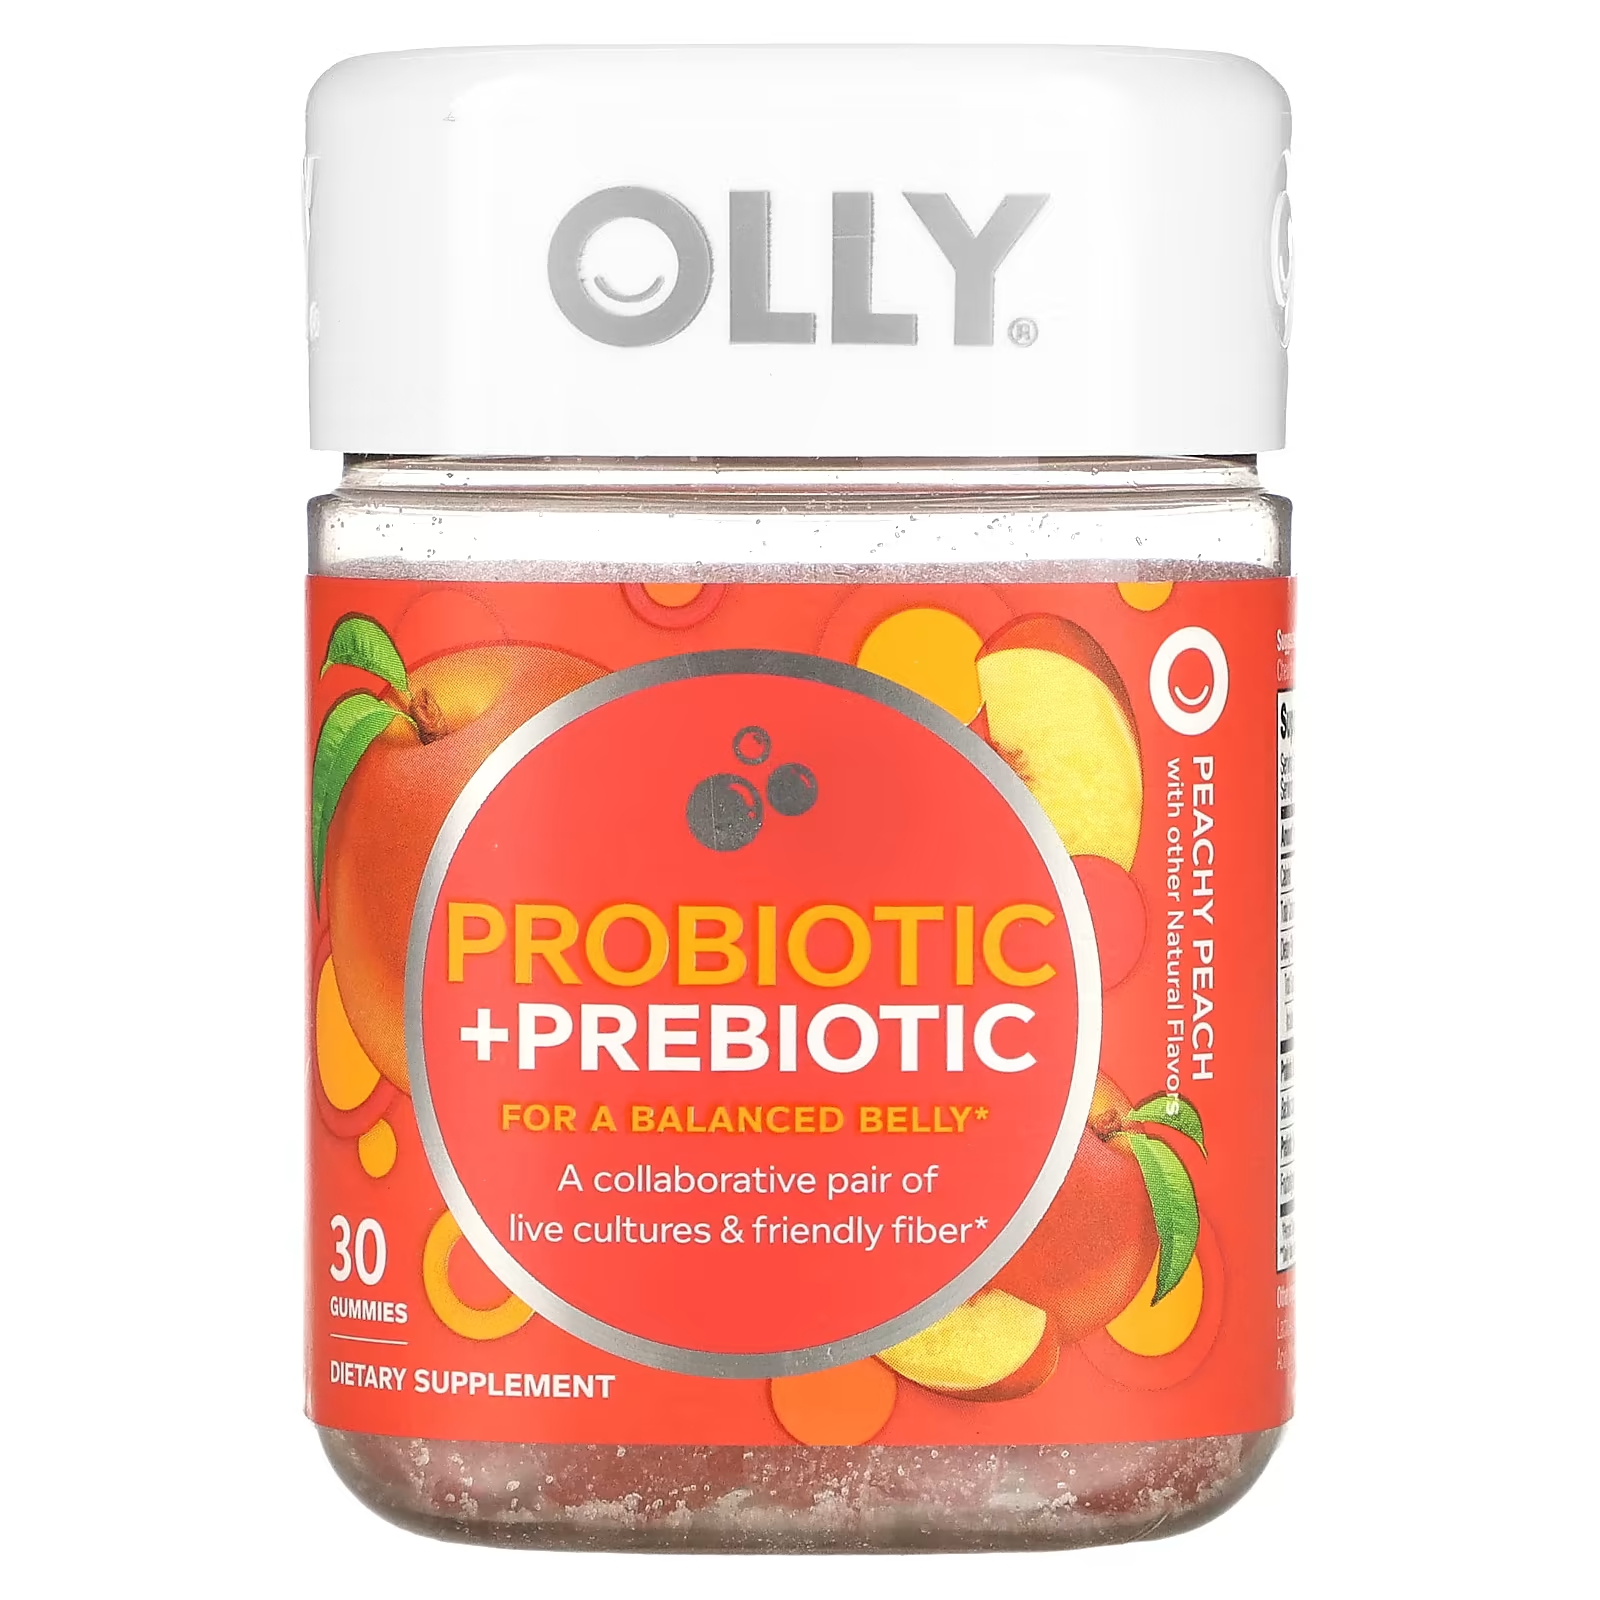 Пробиотик + Пребиотик Olly персик, 30 жевательных таблеток olly пробиотик тропическое манго 1 миллиард живых культур 50 жевательных таблеток